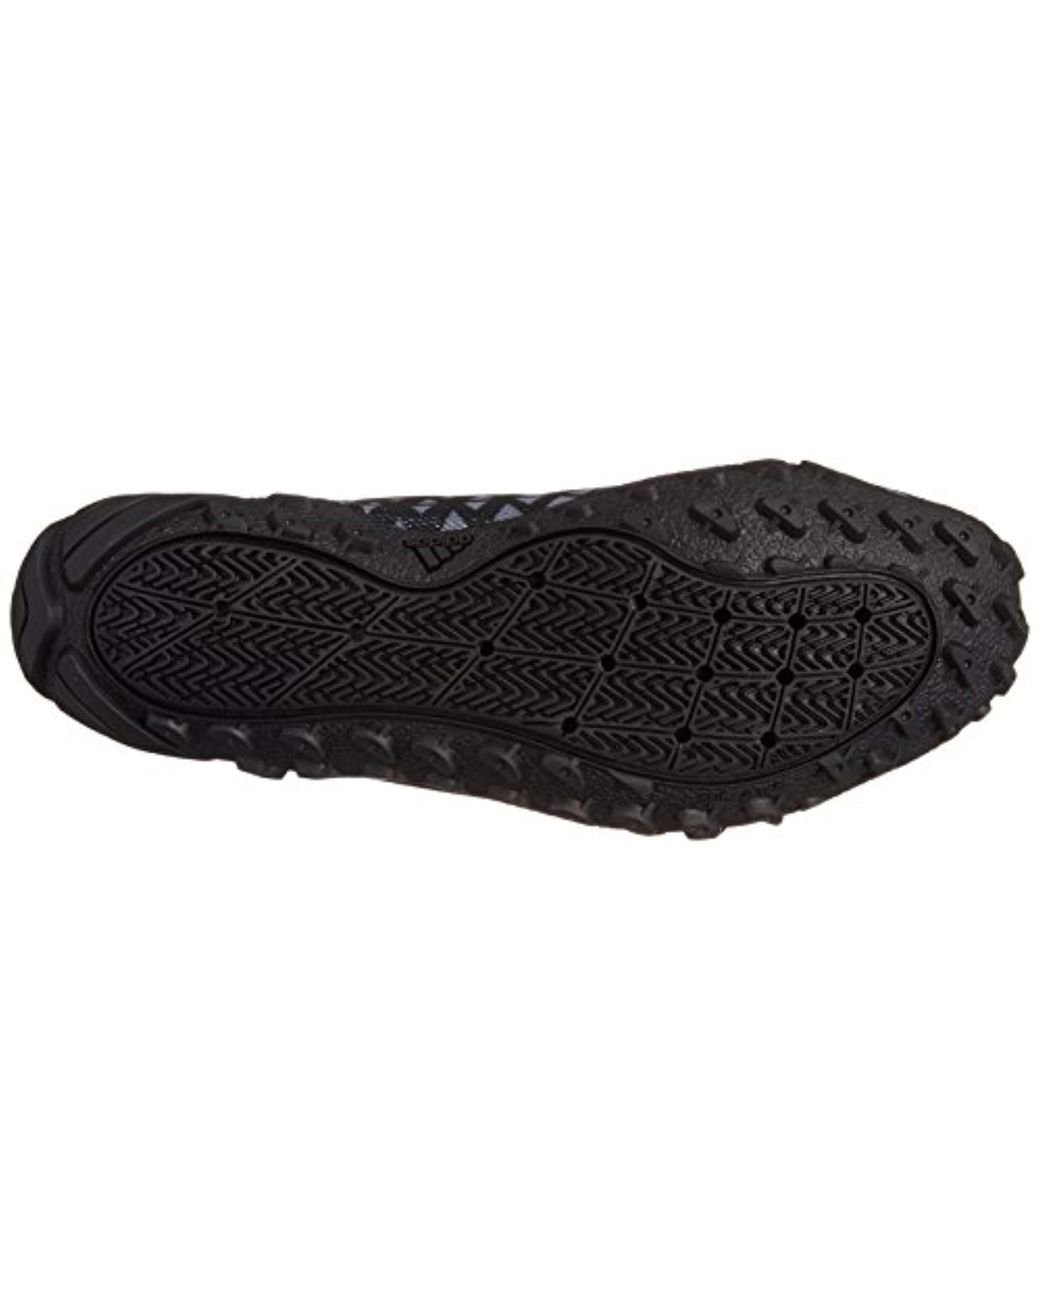 adidas B39895 Kurobe Ii Water Shoes, Vista Grey/core Black/core Black for  Men | Lyst UK